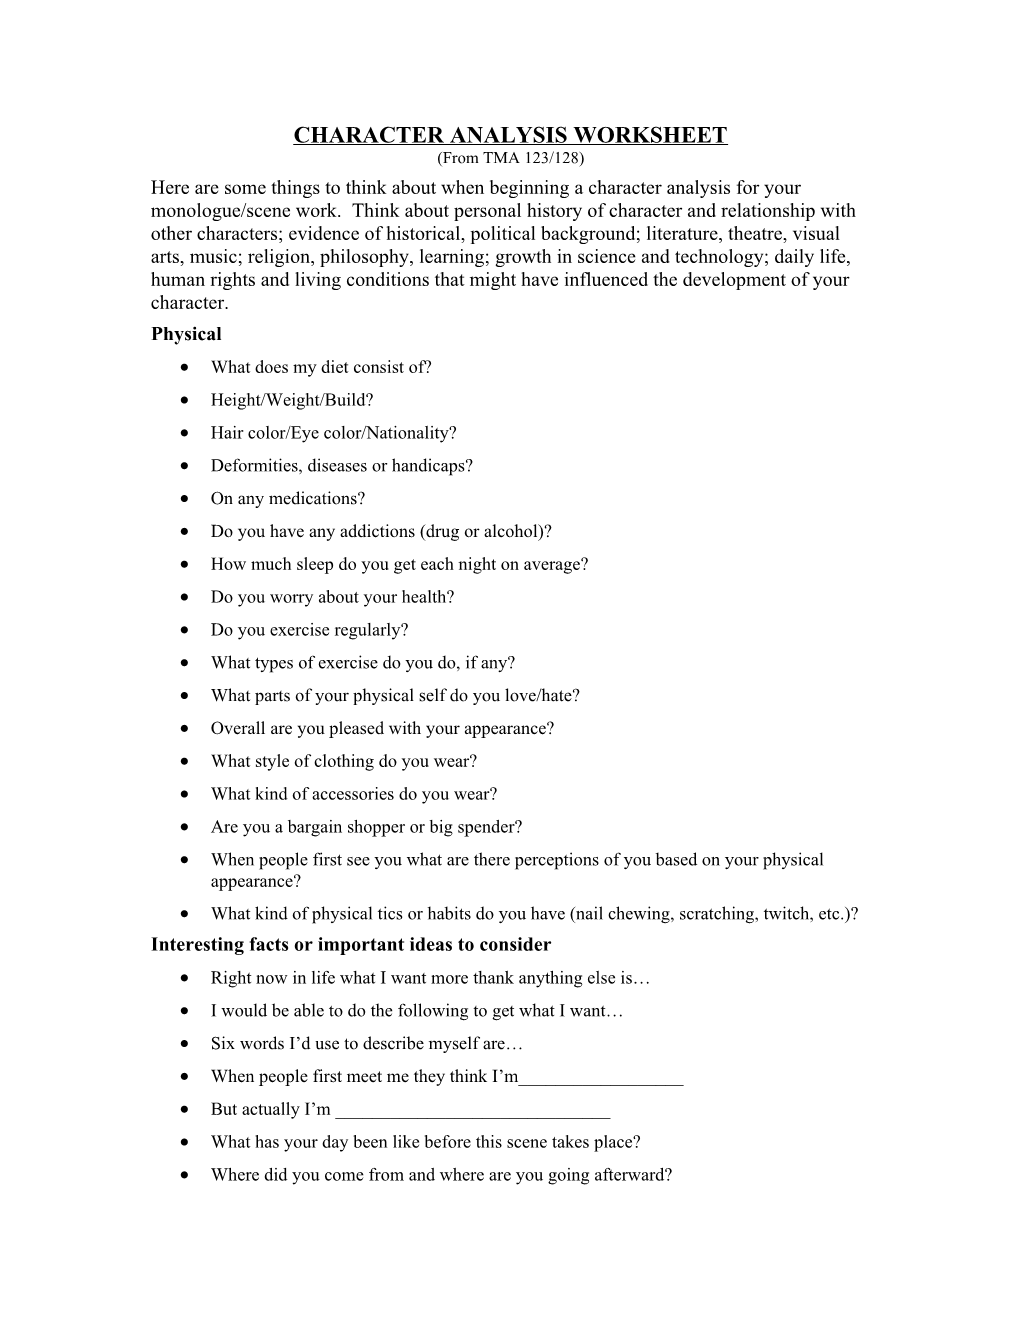 Character Analysis Worksheet s1